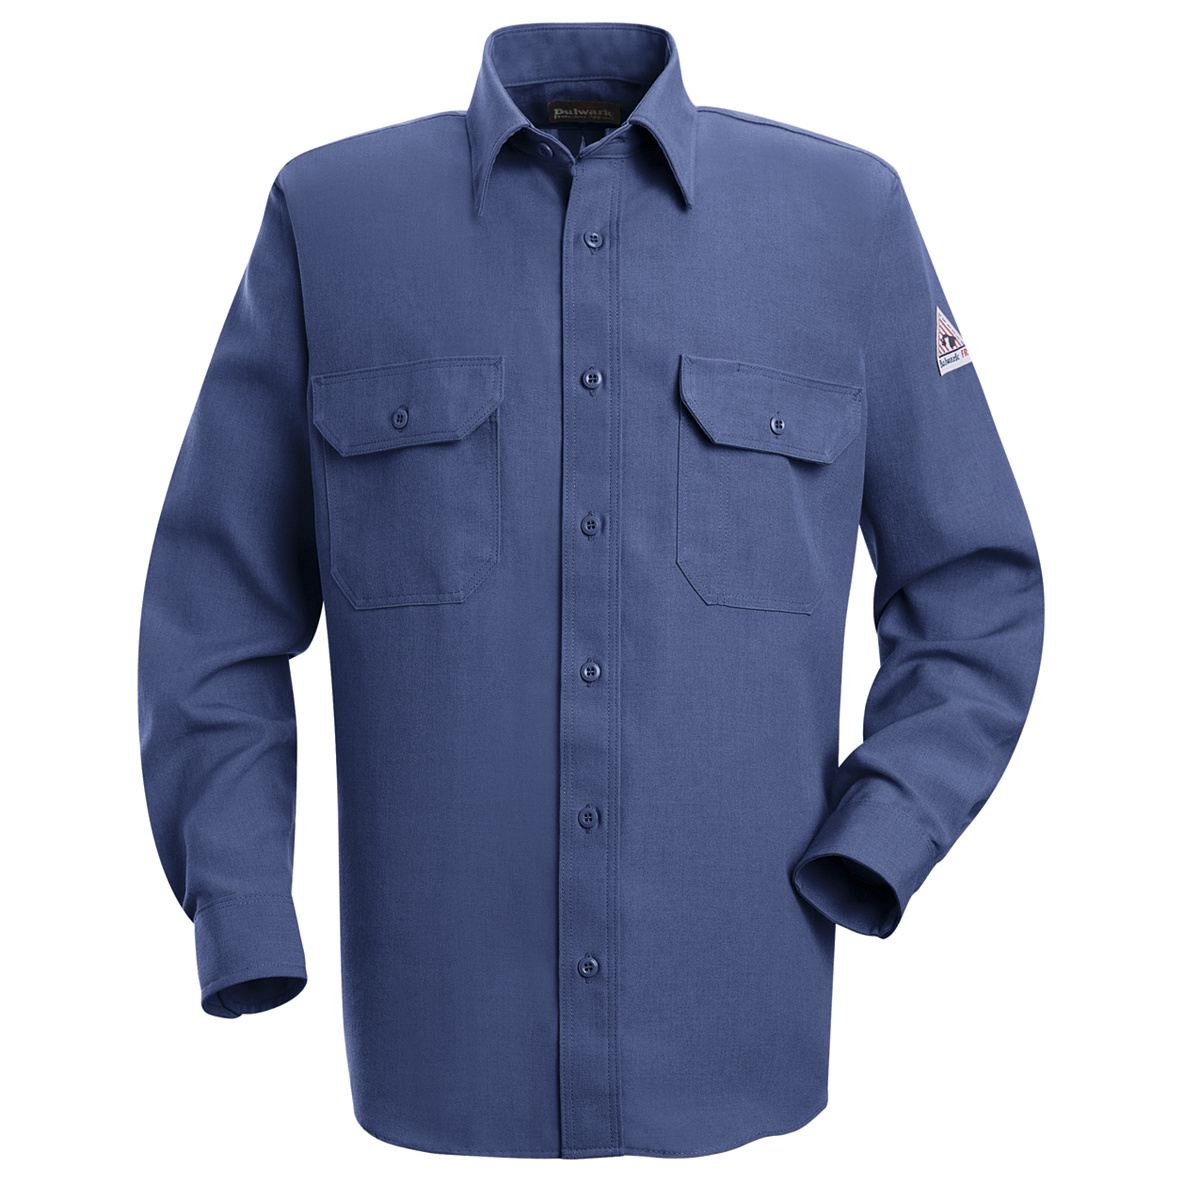 Bulwark® Medium Regular Gulf Blue Nomex® IIIA/Nomex® Aramid/Kevlar® Aramid Flame Resistant Uniform Shirt With Button Front Closu